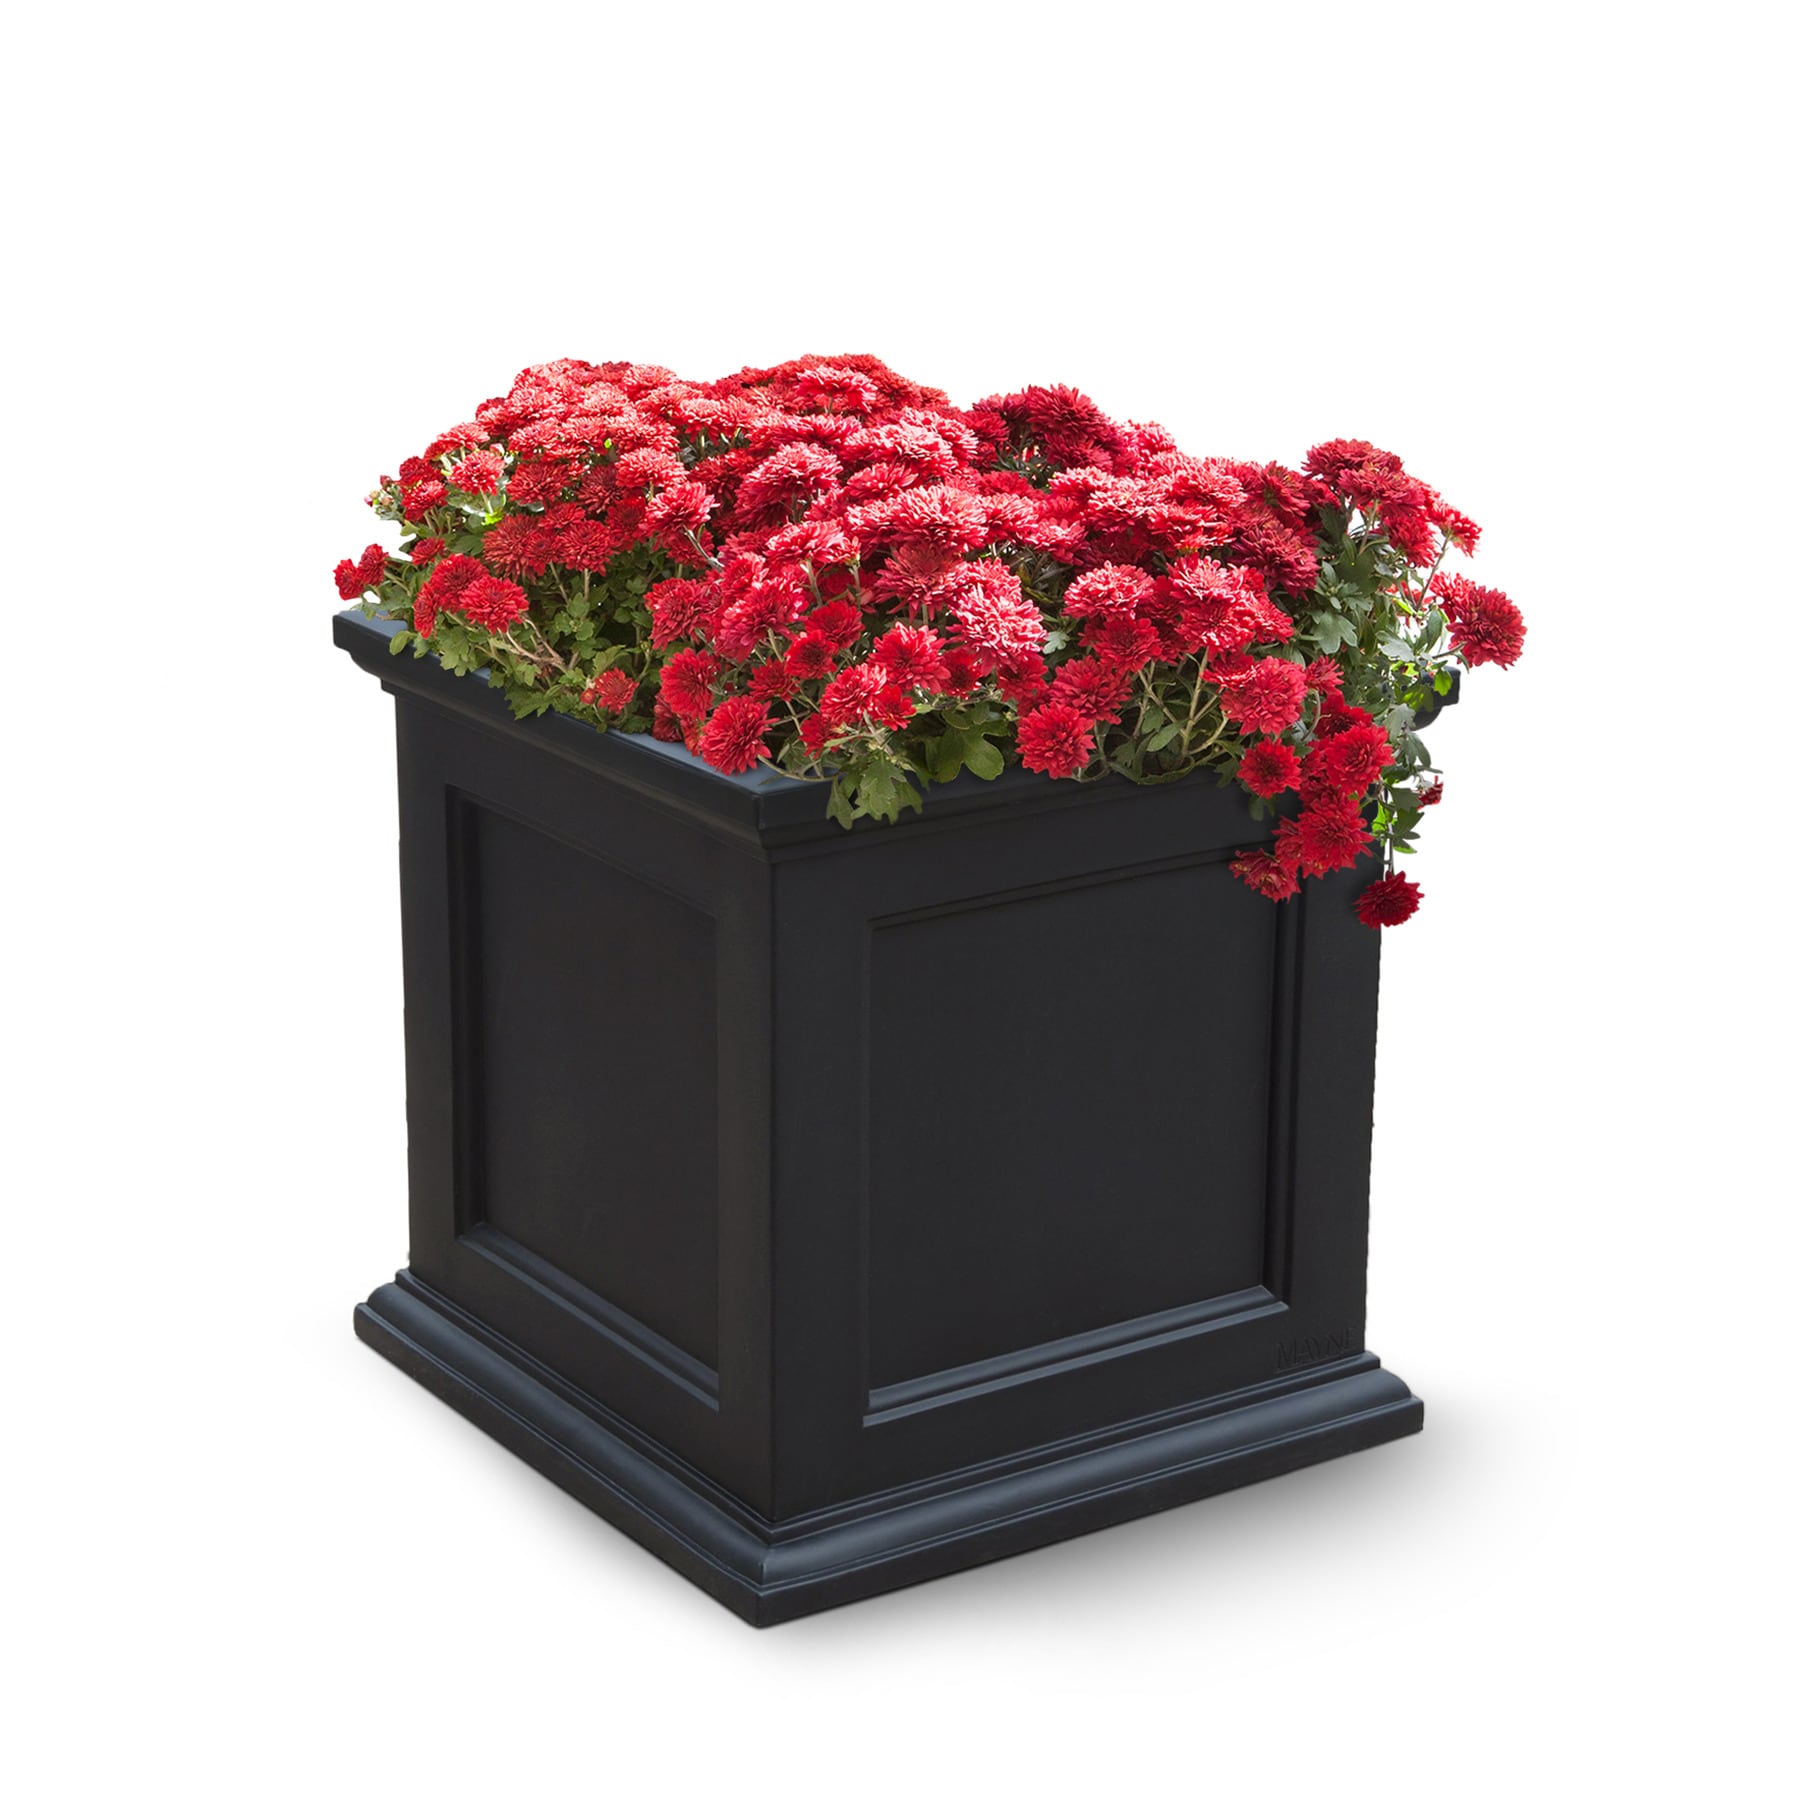  Olly & Rose Extra Large Plant Pot - Black Garden Planter - XL  Flower Pot - 18 inch Diameter : Patio, Lawn & Garden